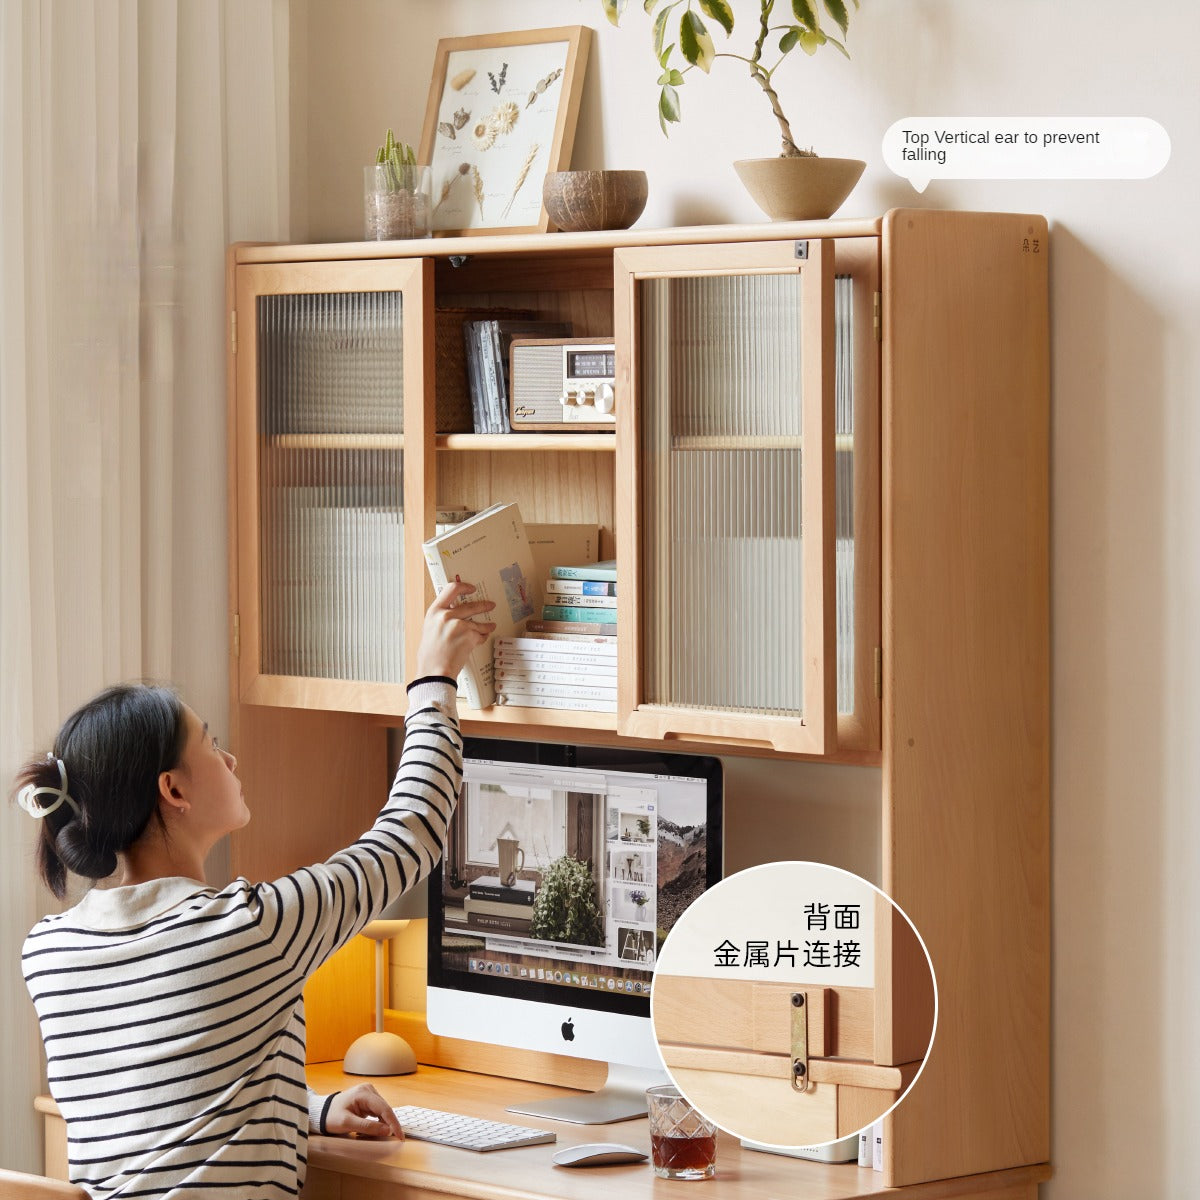 Beech solid wood office, desk storage shelf, bookshelf integrated"